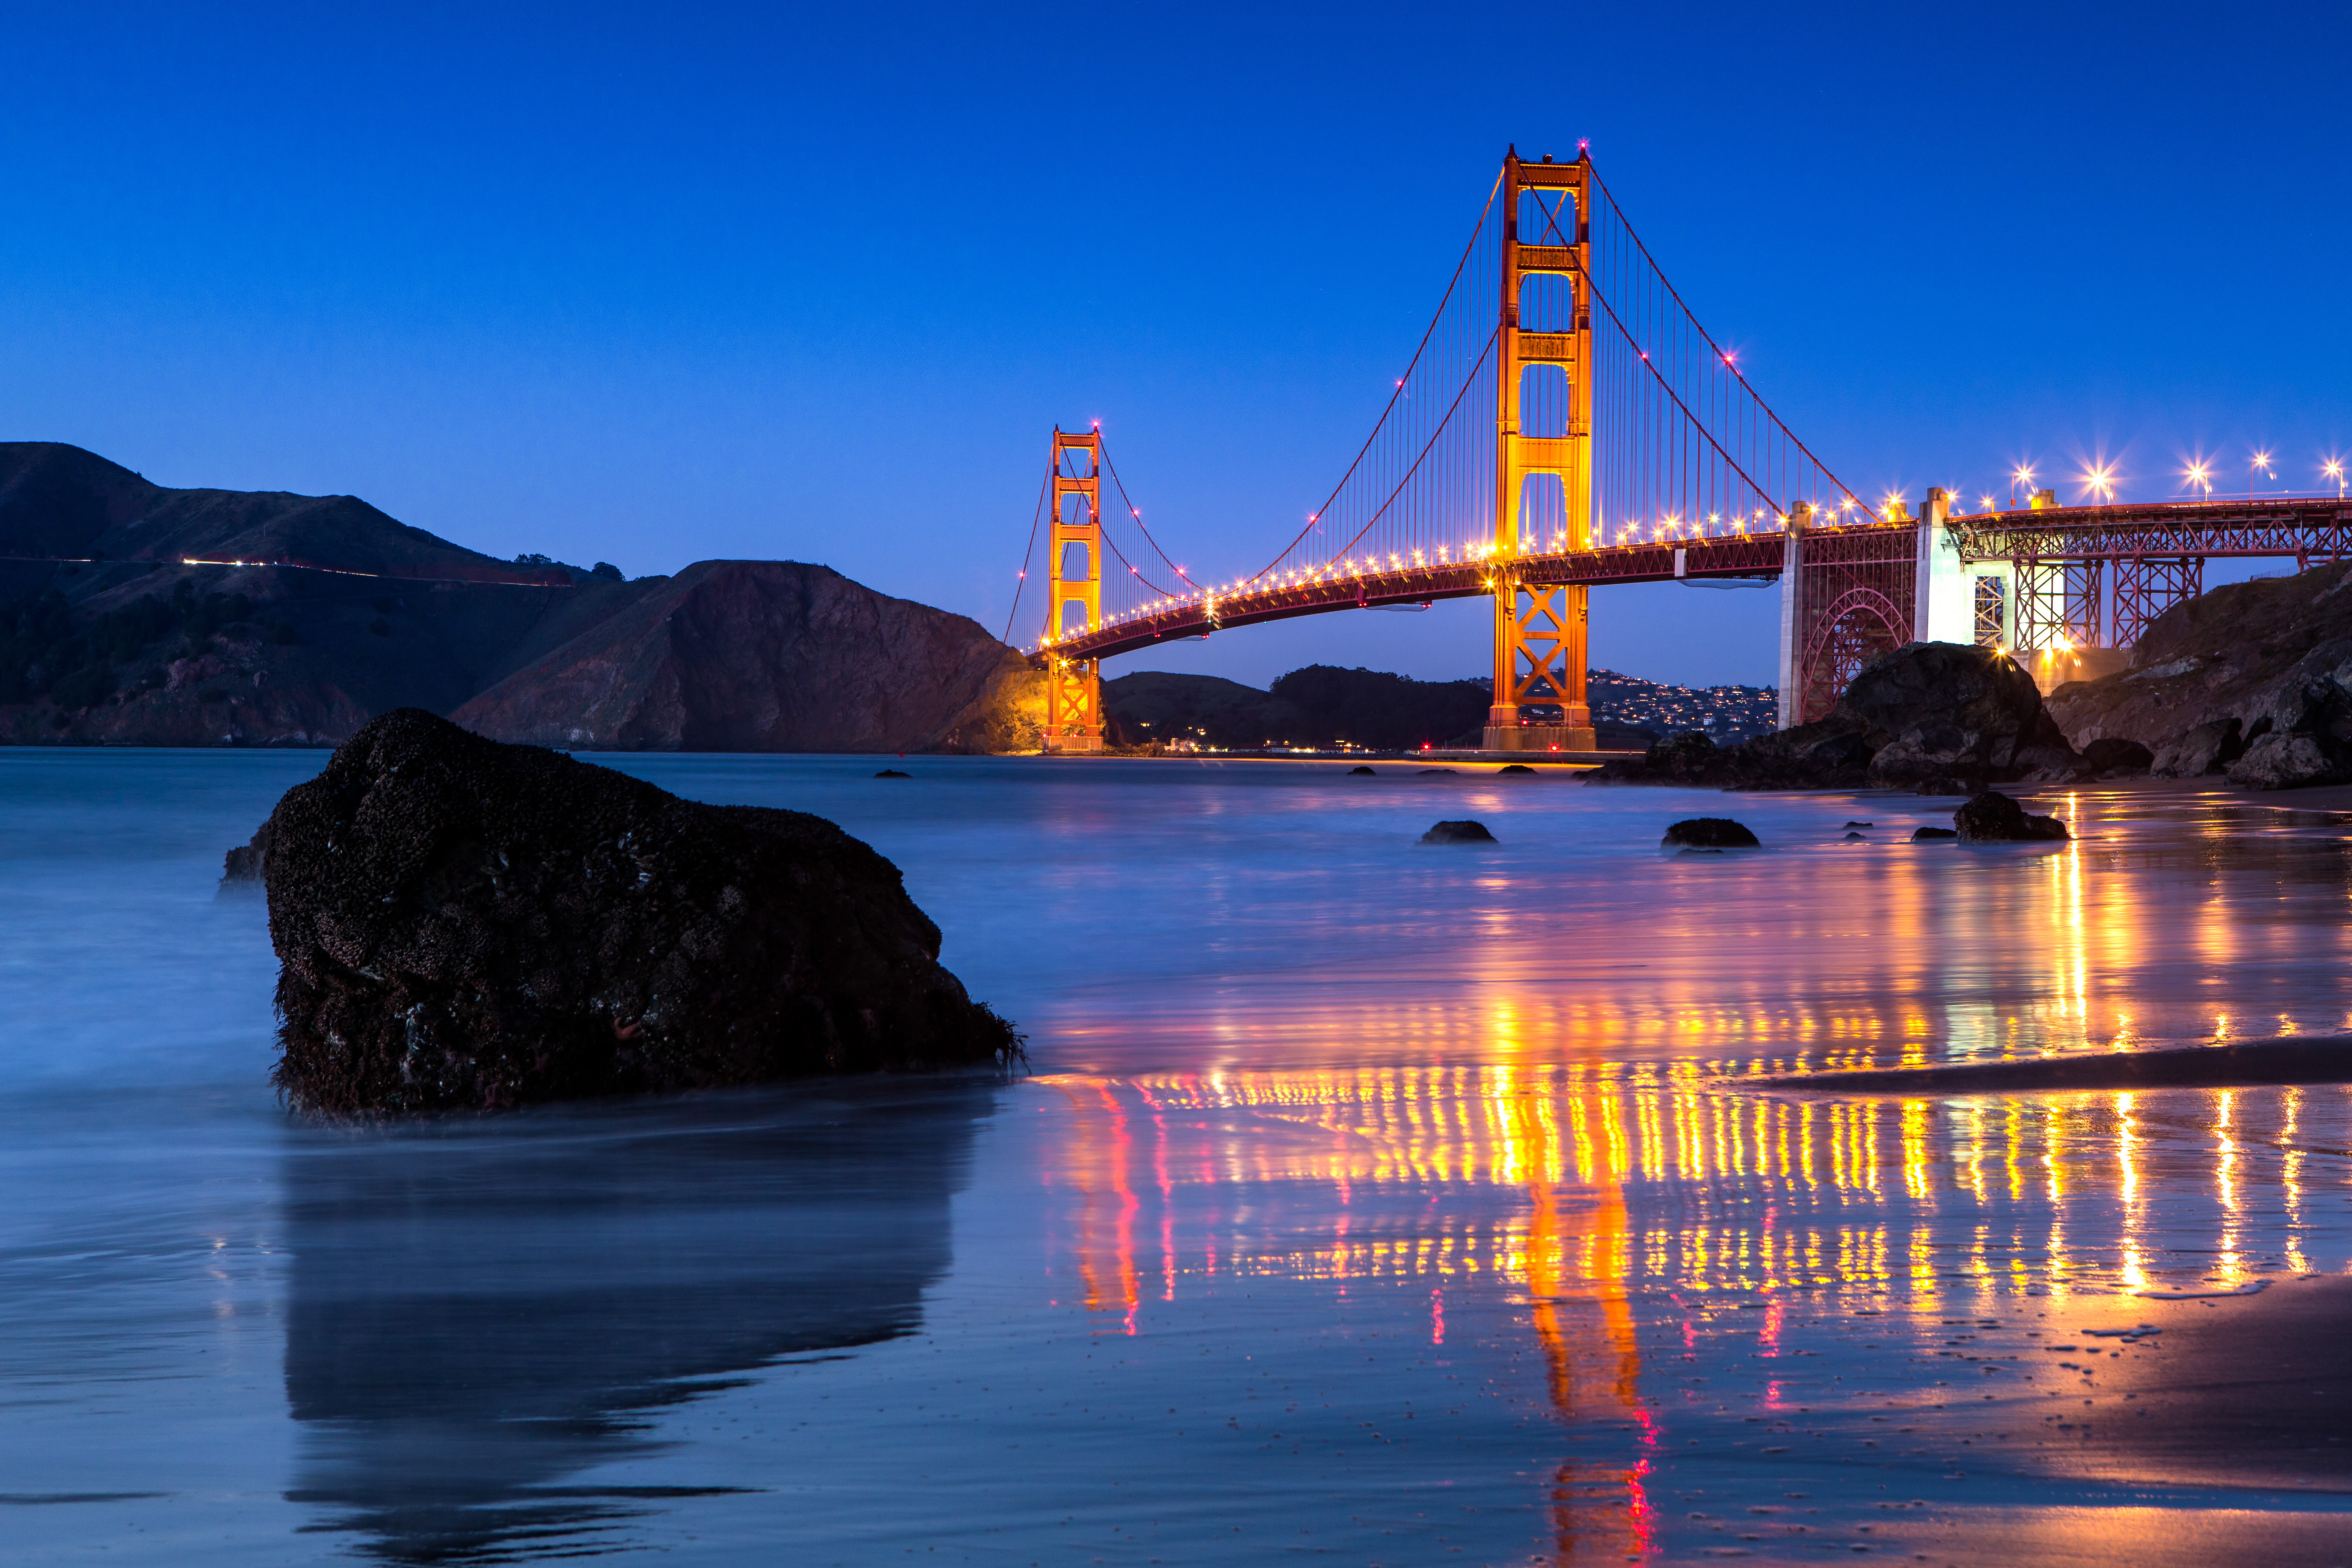 Калифорния. Мост золотые ворота в Сан-Франциско. Мост Голден гейт Сан Франциско. Лос Анджелес мост золотые ворота. МГСТ голдан геидс Сан Франциско.